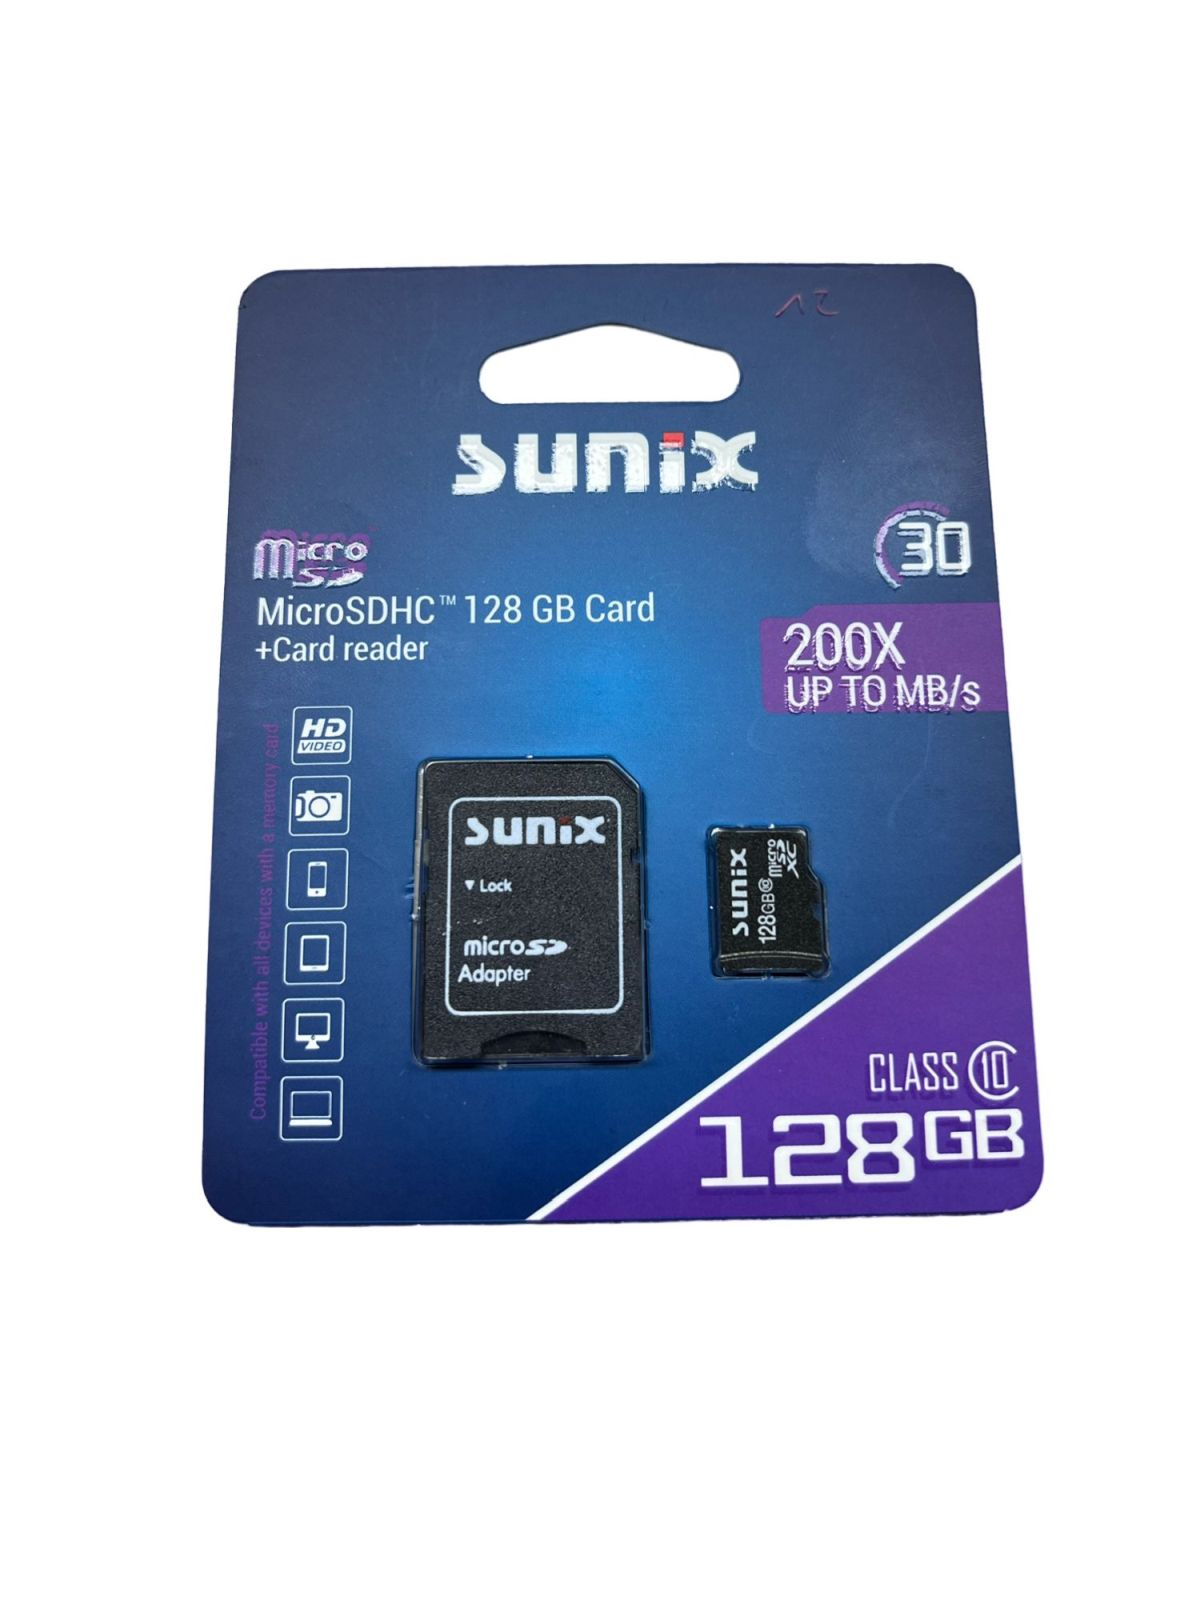 SUNIX Micro-SDHC 128 GB Karte, MicroSDHC 11, Speicherkarte Class